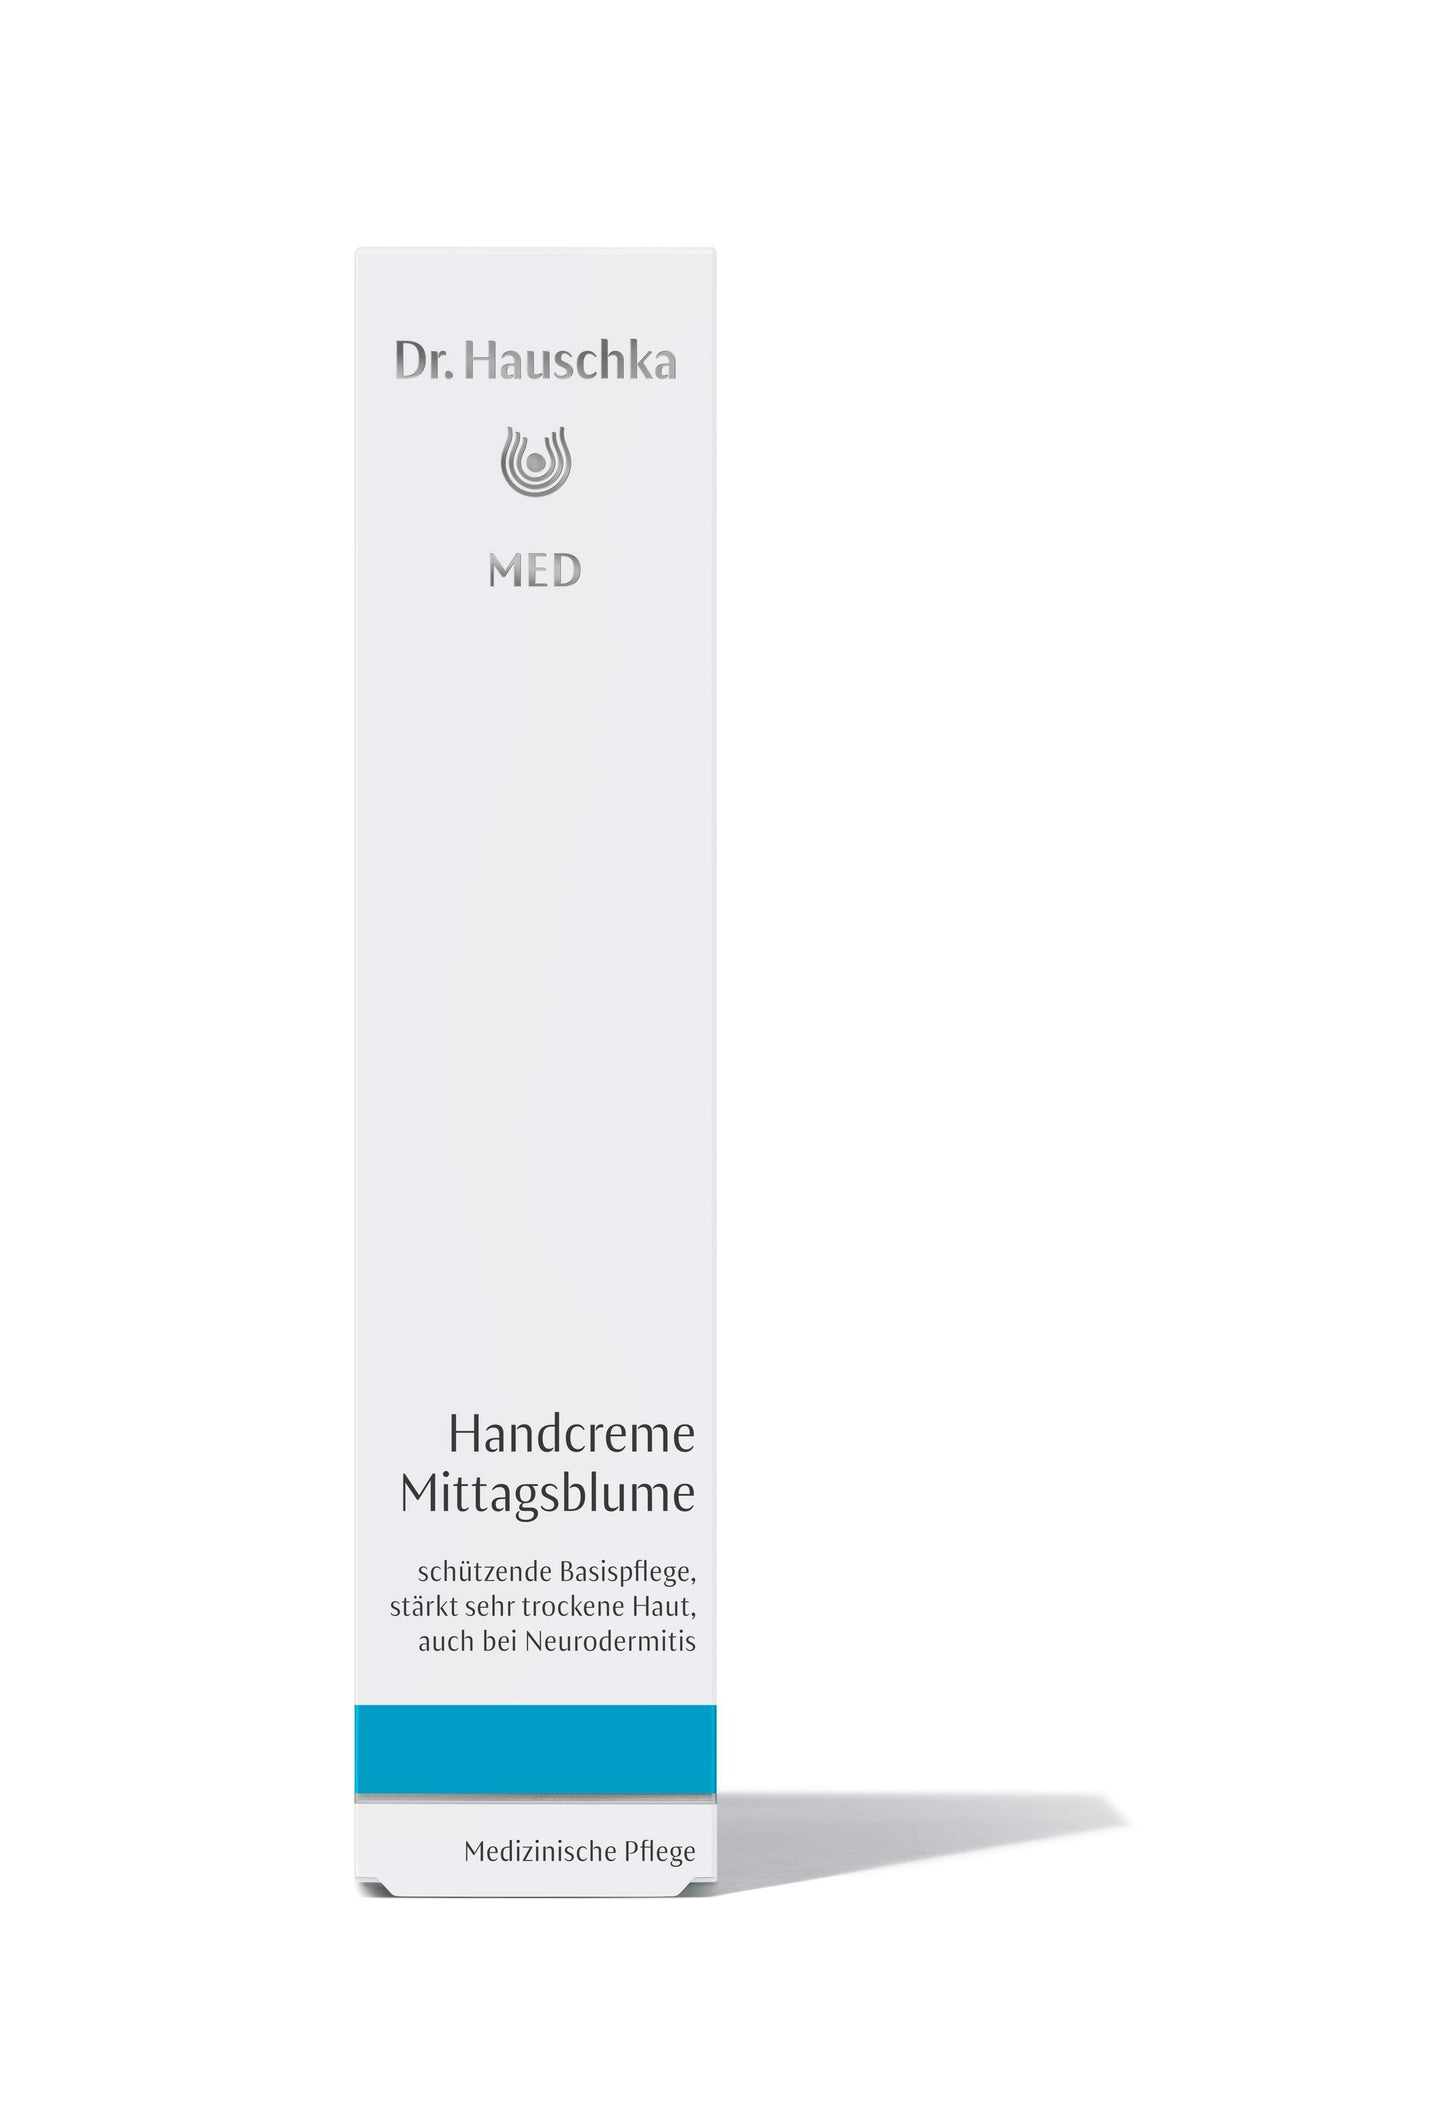 Dr. Hauschka - MED Handcreme Mittagsblume - 50 ml